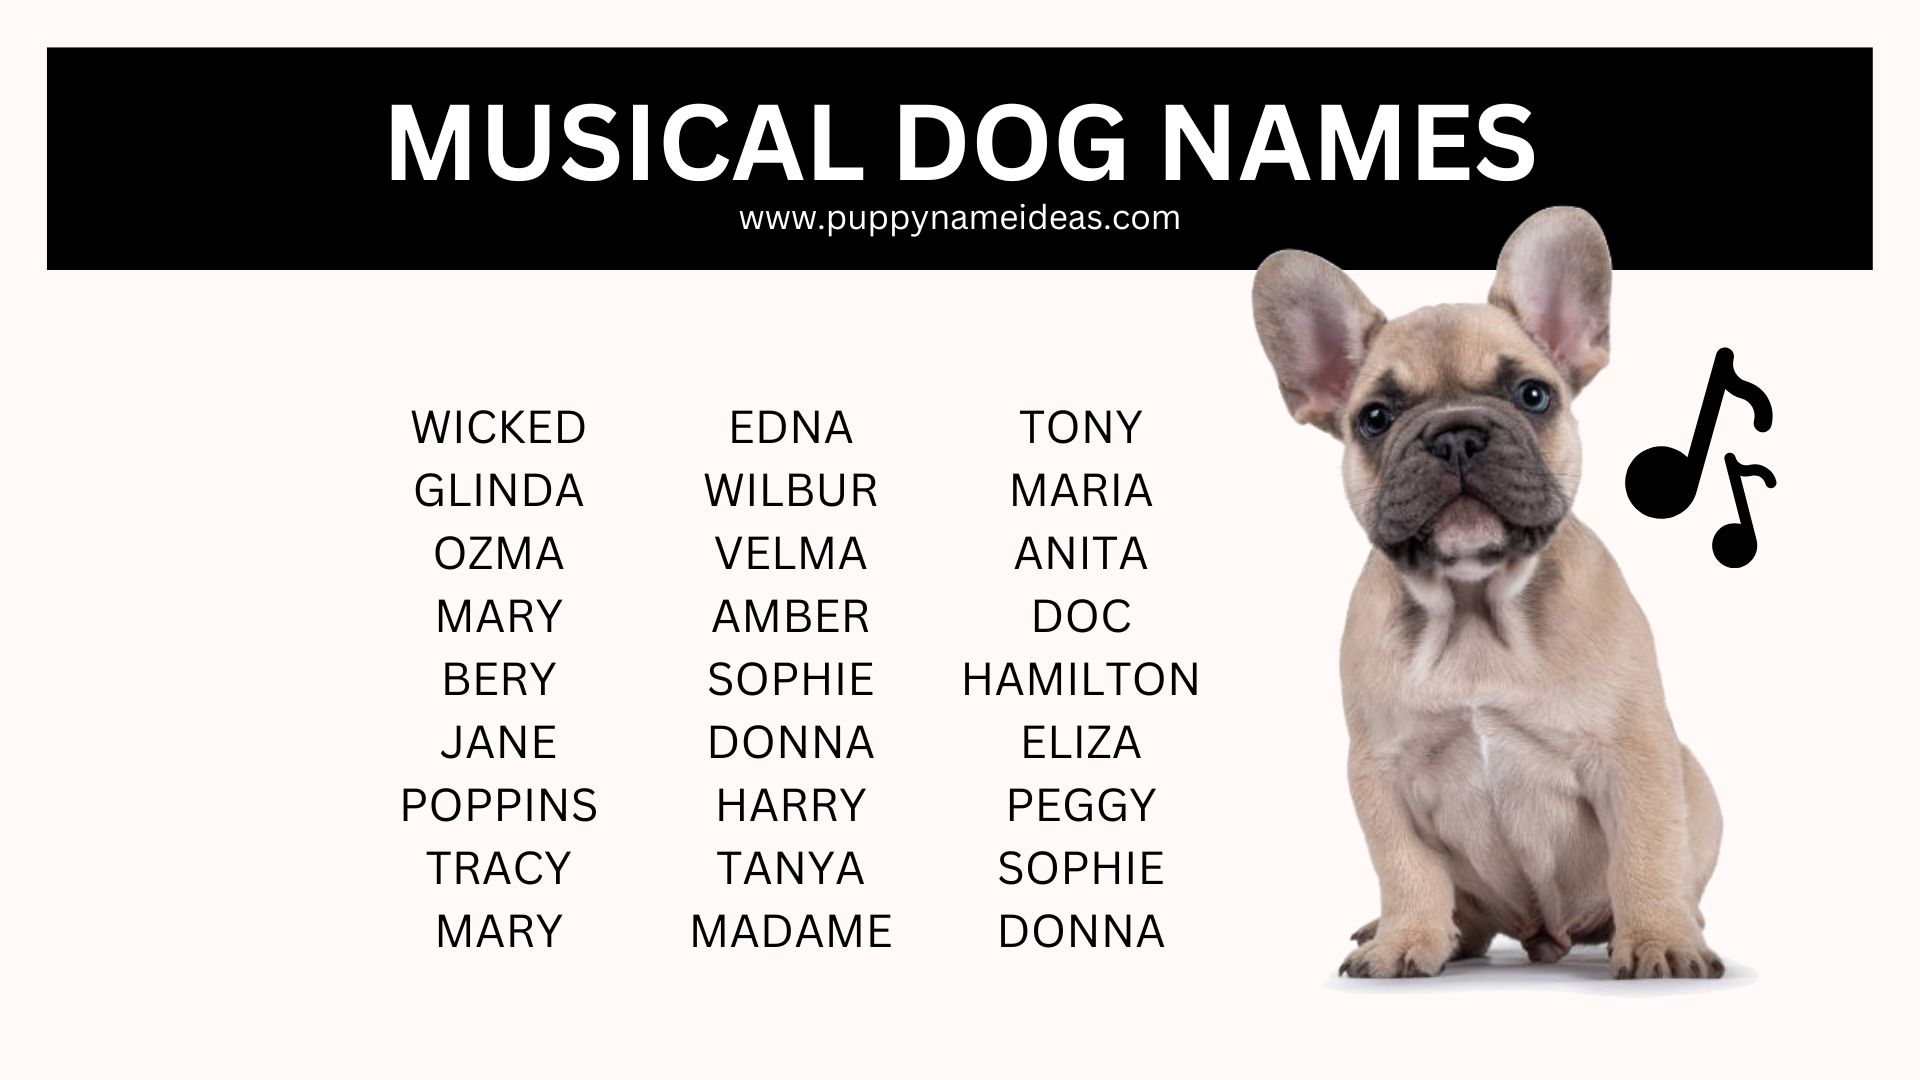 330+ Musical Dog Names